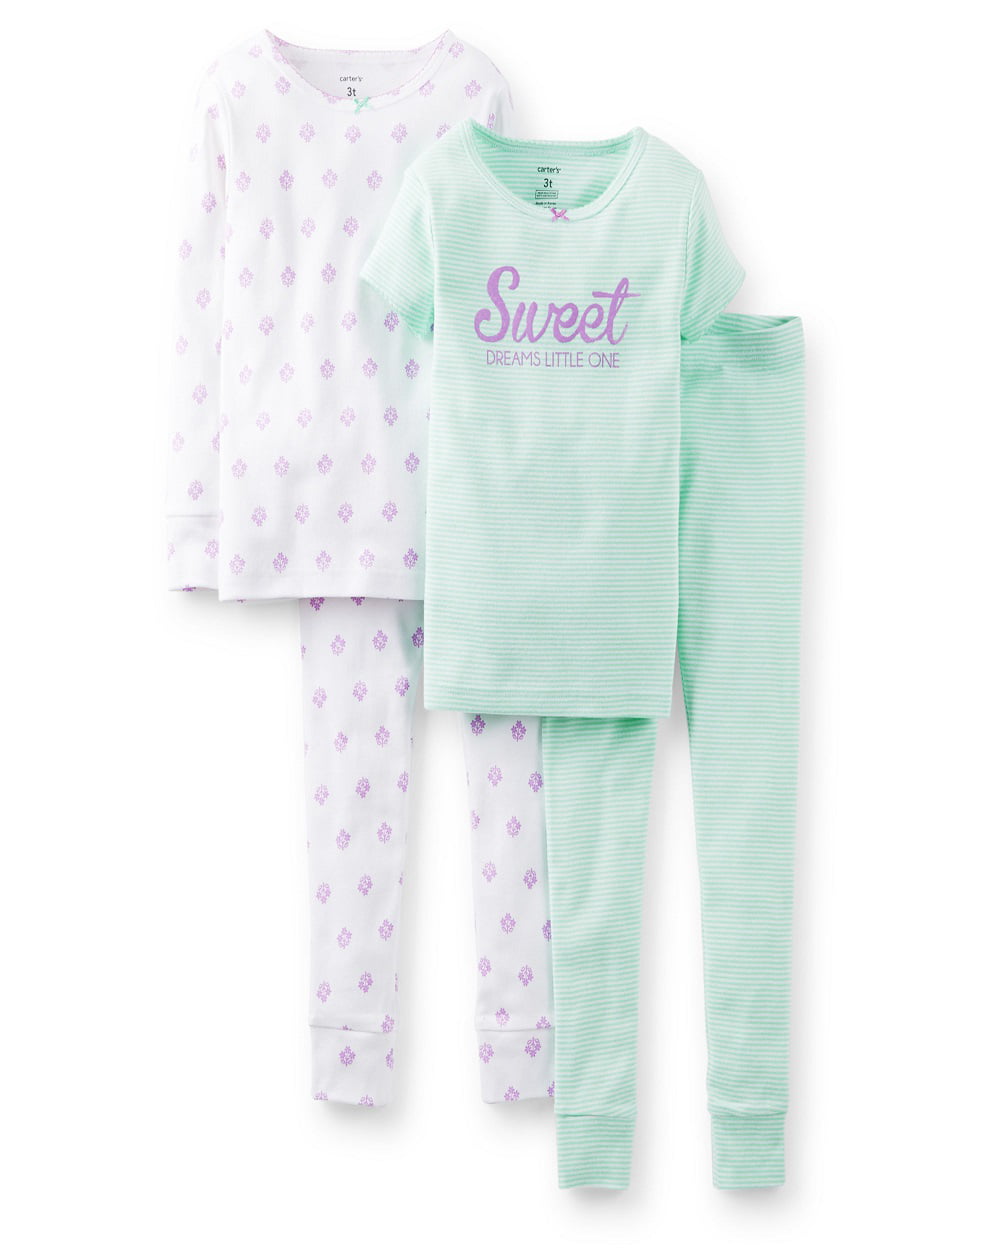 Girls Shimmer & Shine Short Pyjamas Kids Character Shortie PJs 2 Piece Set Size 